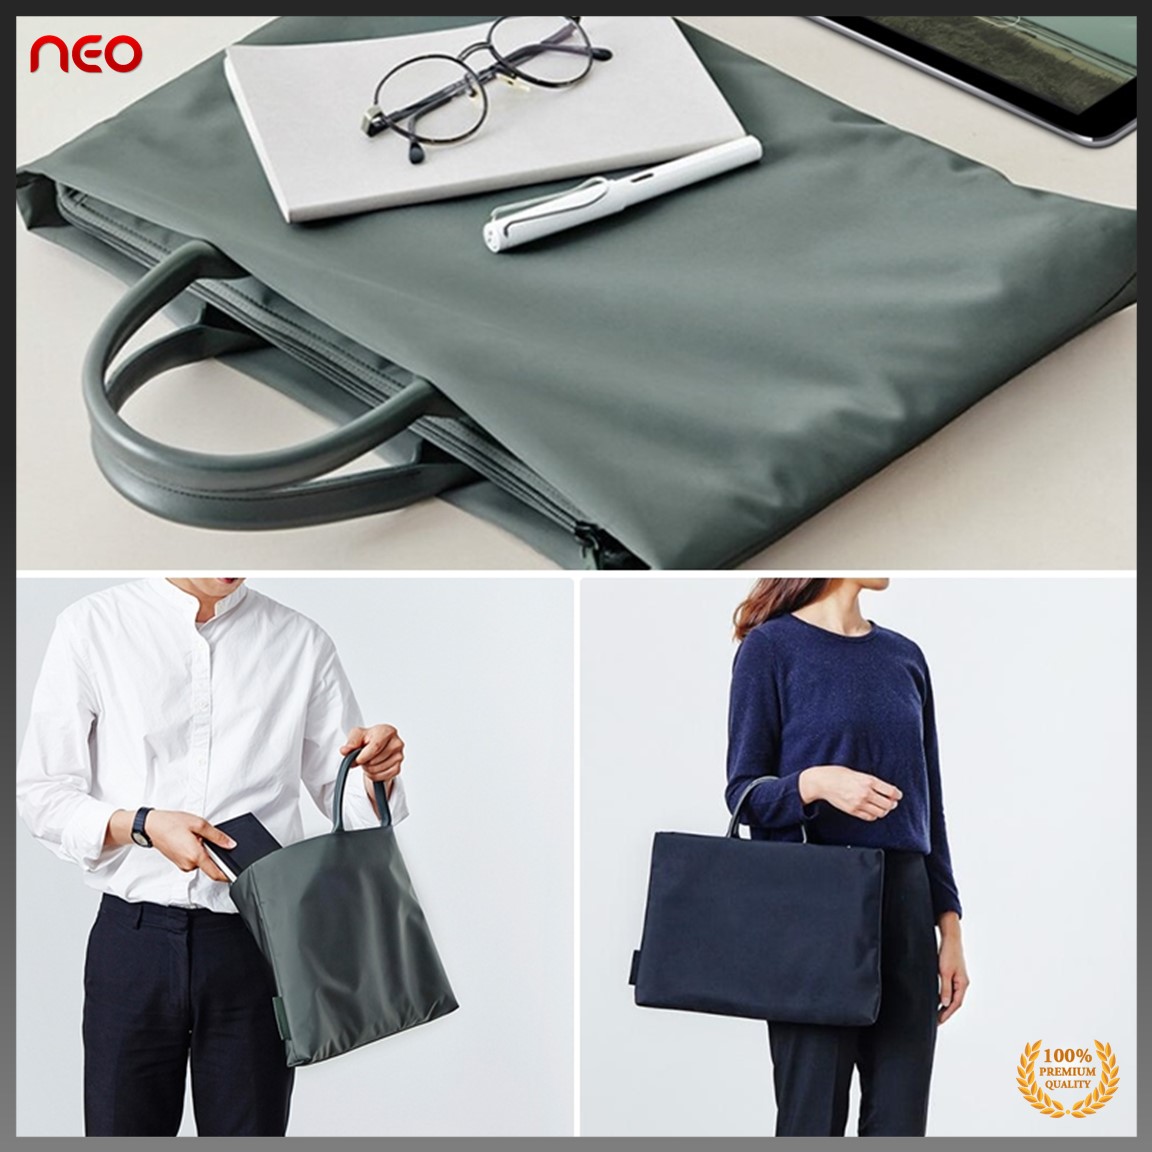 NEO กระเป๋าโน๊คบุ๊ค กระเป๋าMacbook เคสแล็ปท็อป ดีไซน์เรียบหรู กระเป๋าถือ ความจุเยอะ Large Capacity Bag for Macbook Laptop 15.6 inch